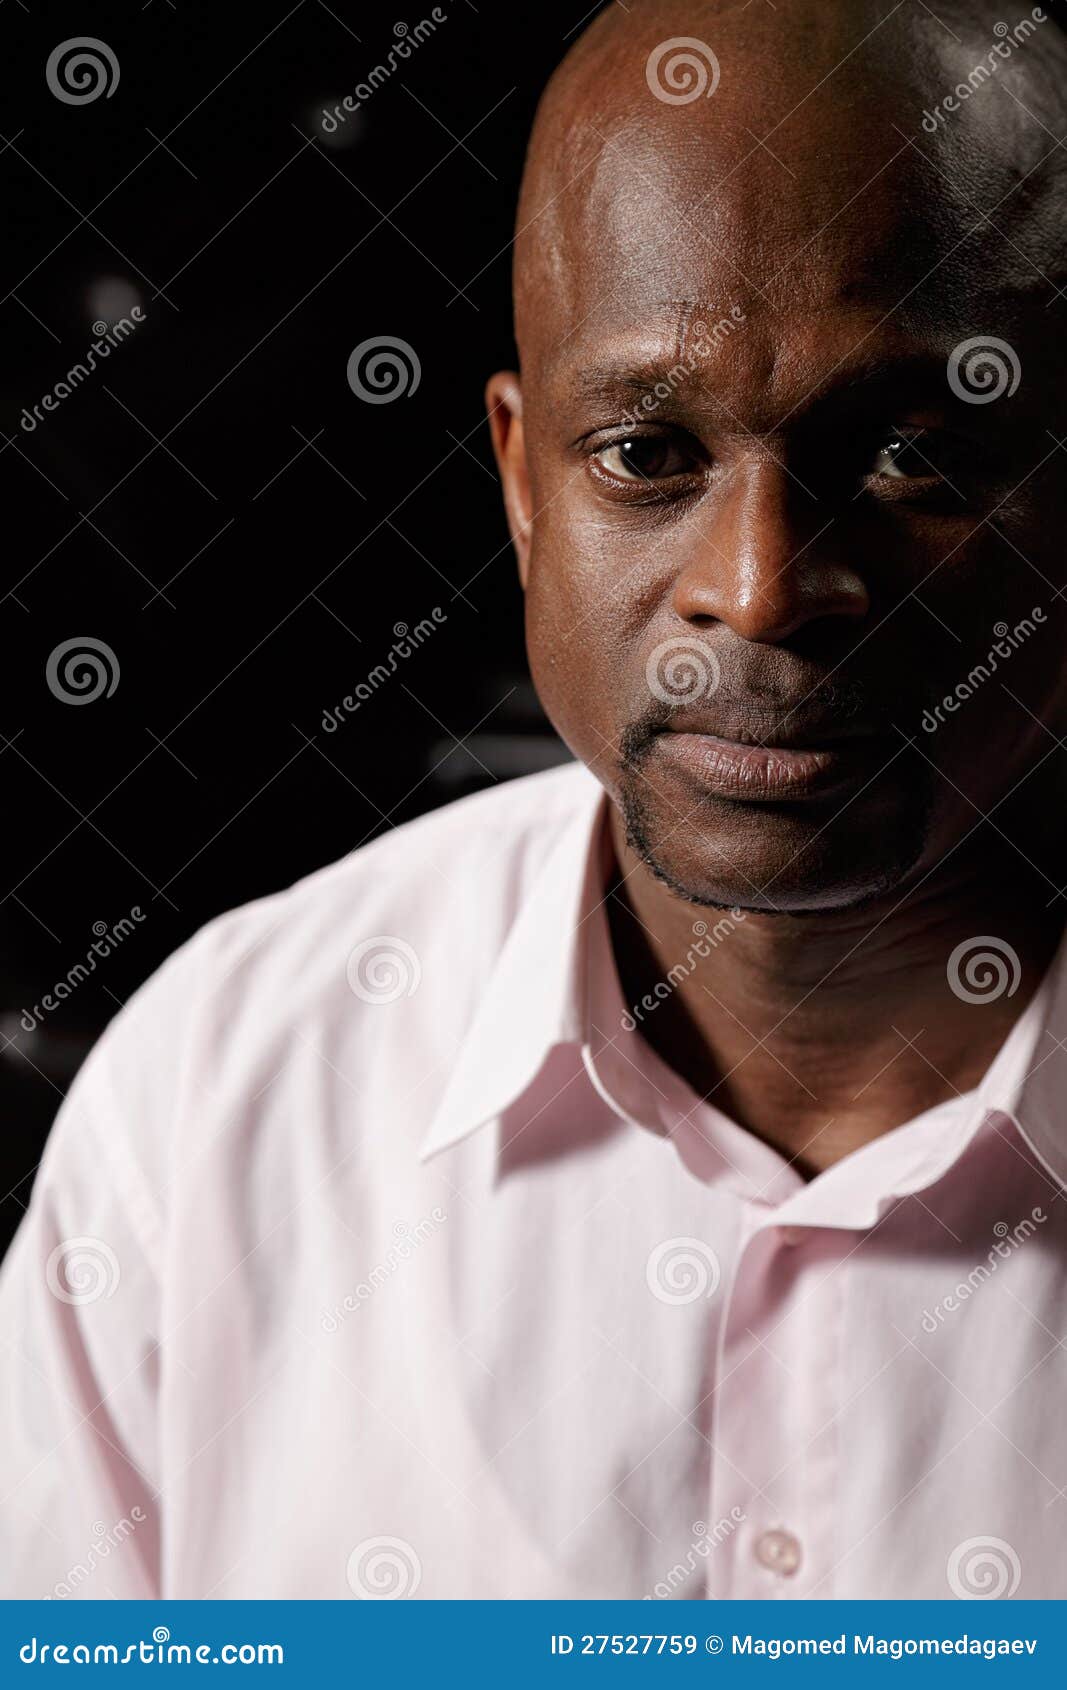 African man closeup stock image. Image of darkness, indoors - 27527759